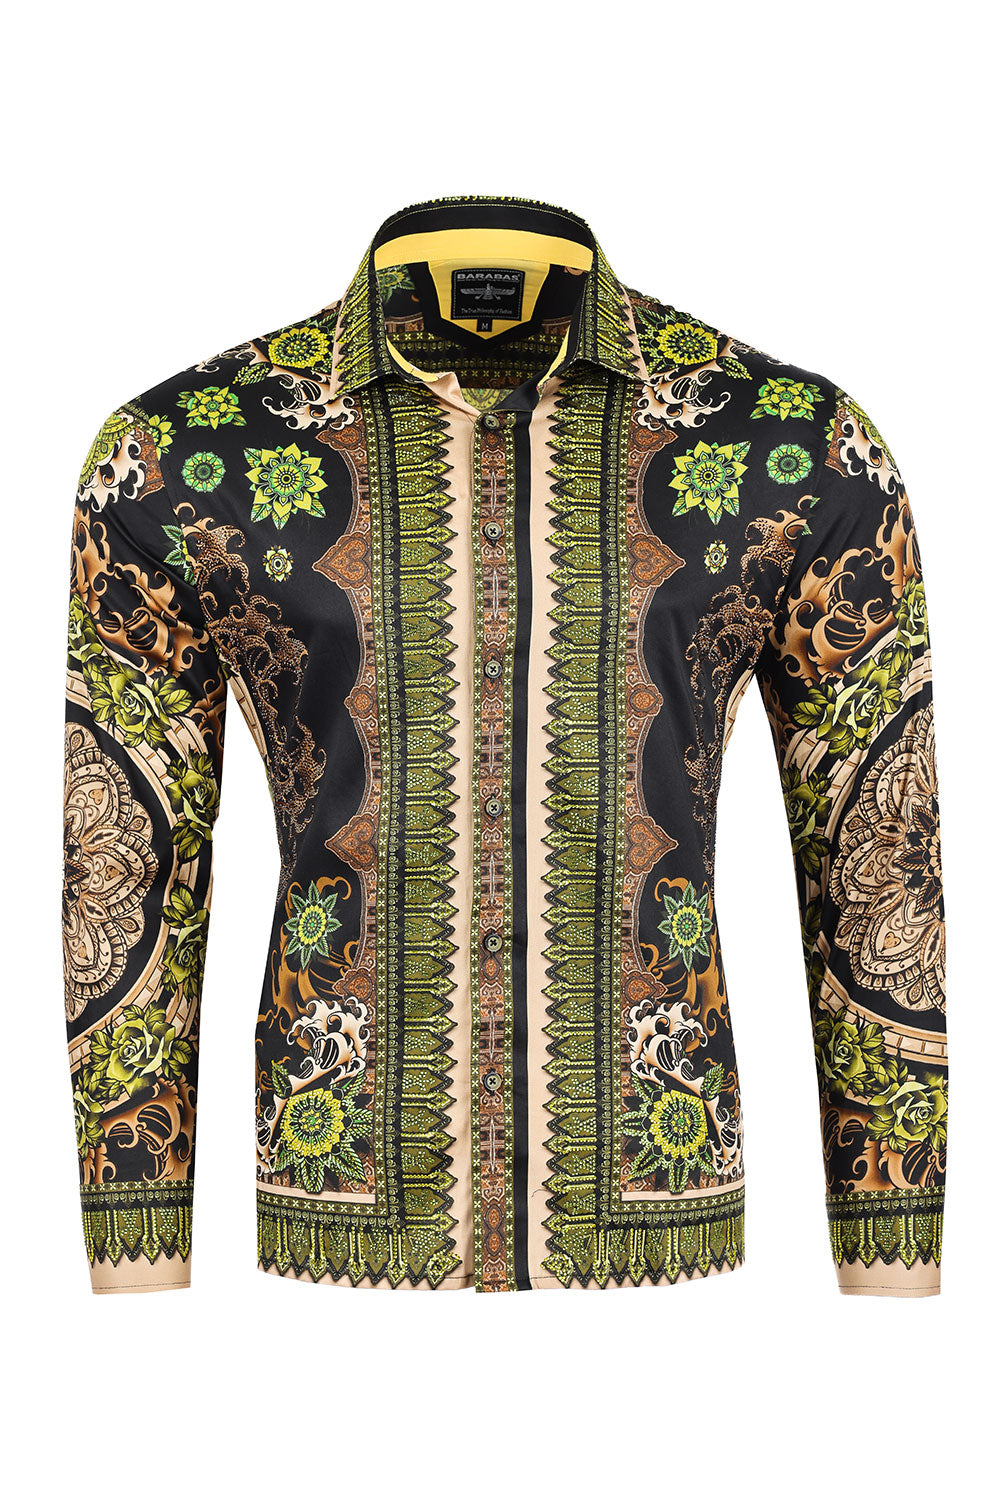 BARABAS Men's Rhinestone Floral Print Baroque Long Sleeve Shirts 3SPR413 Lime